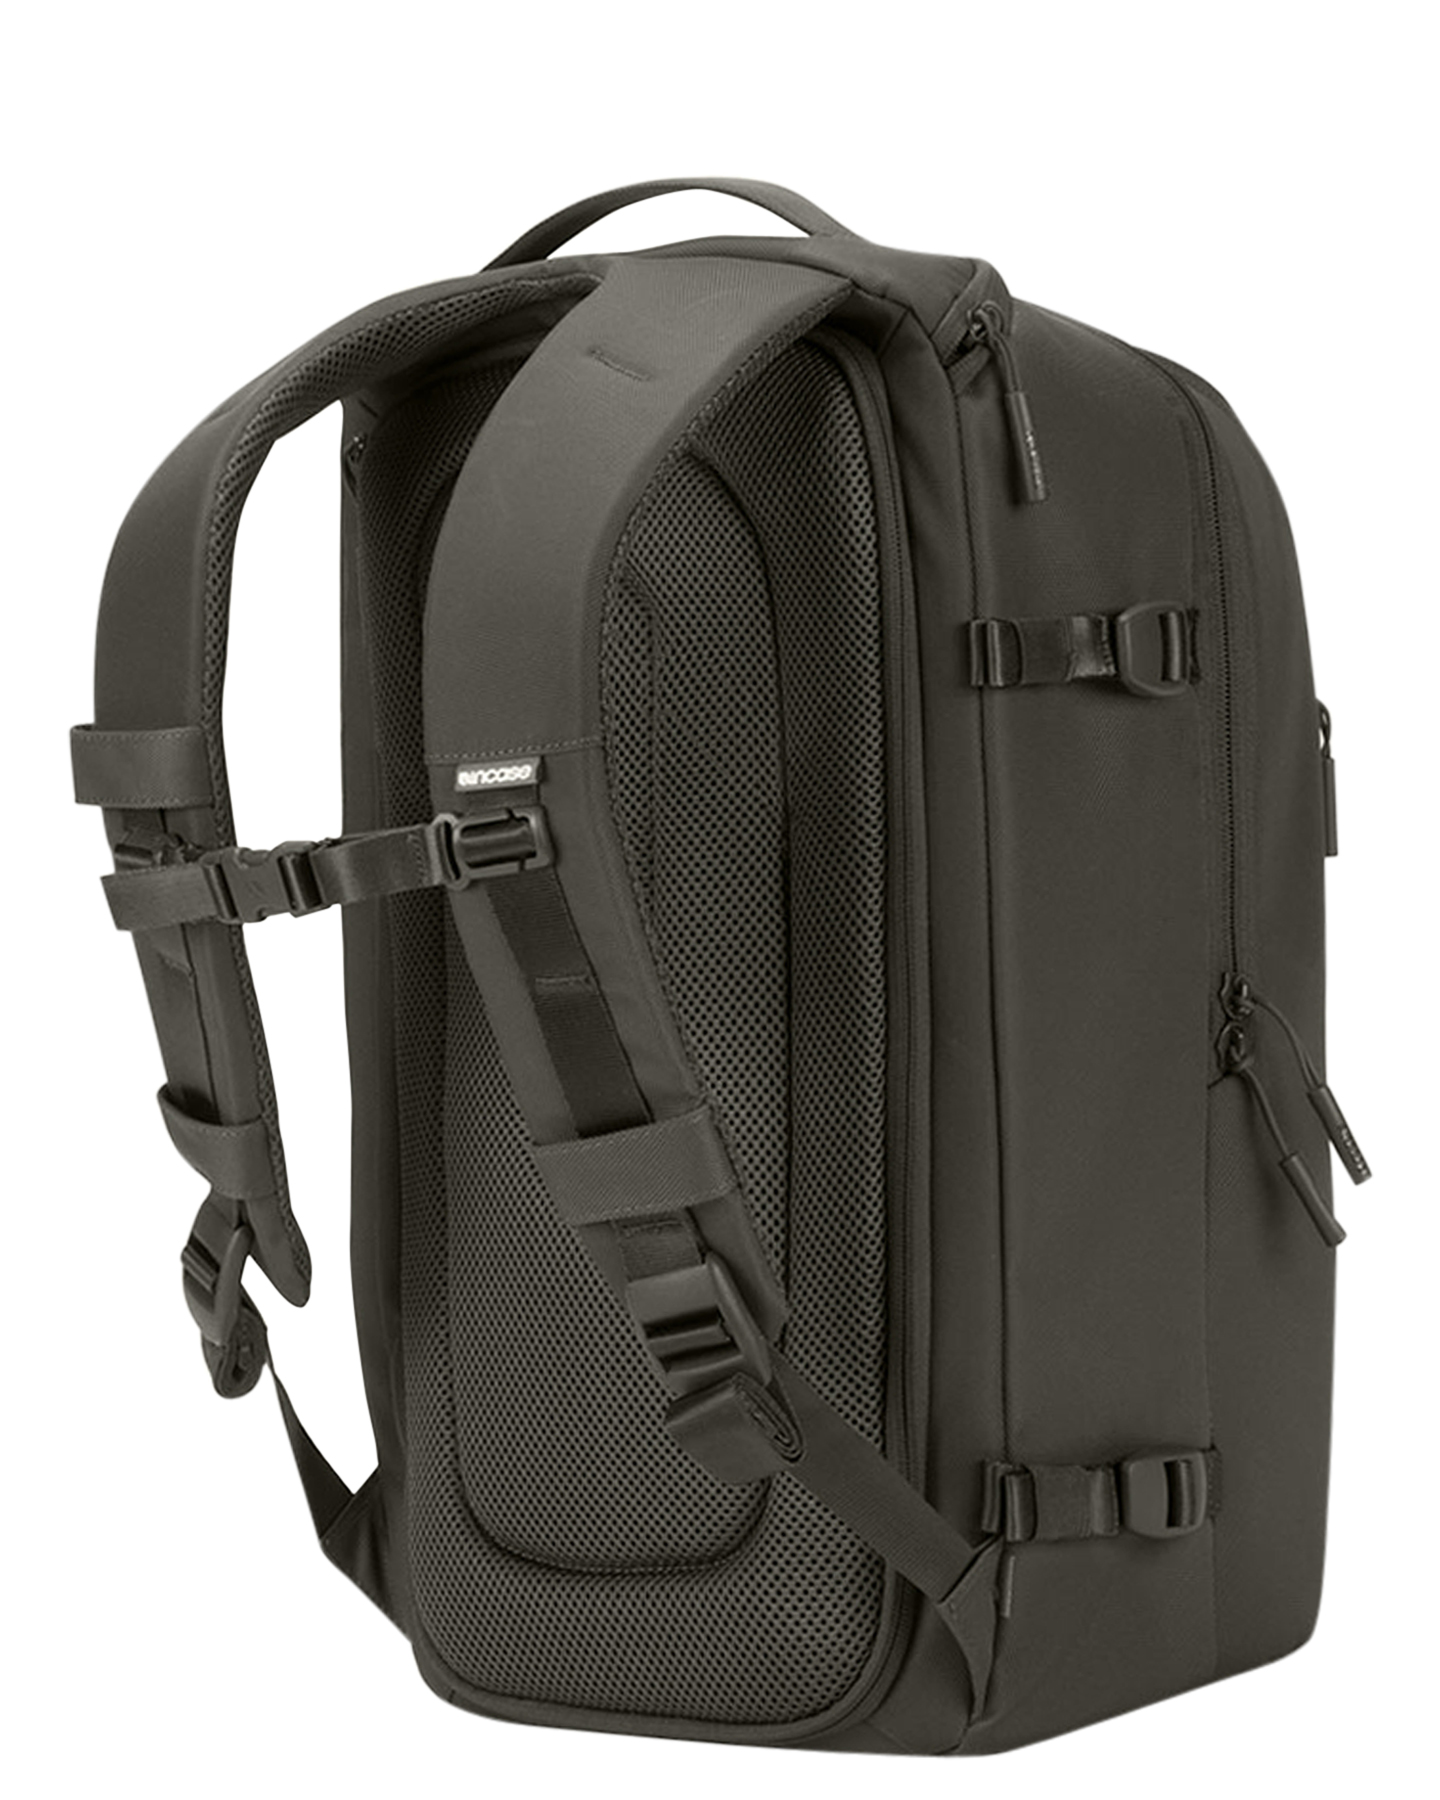 Incase Dslr Pro Backpack - Anthracite | SurfStitch